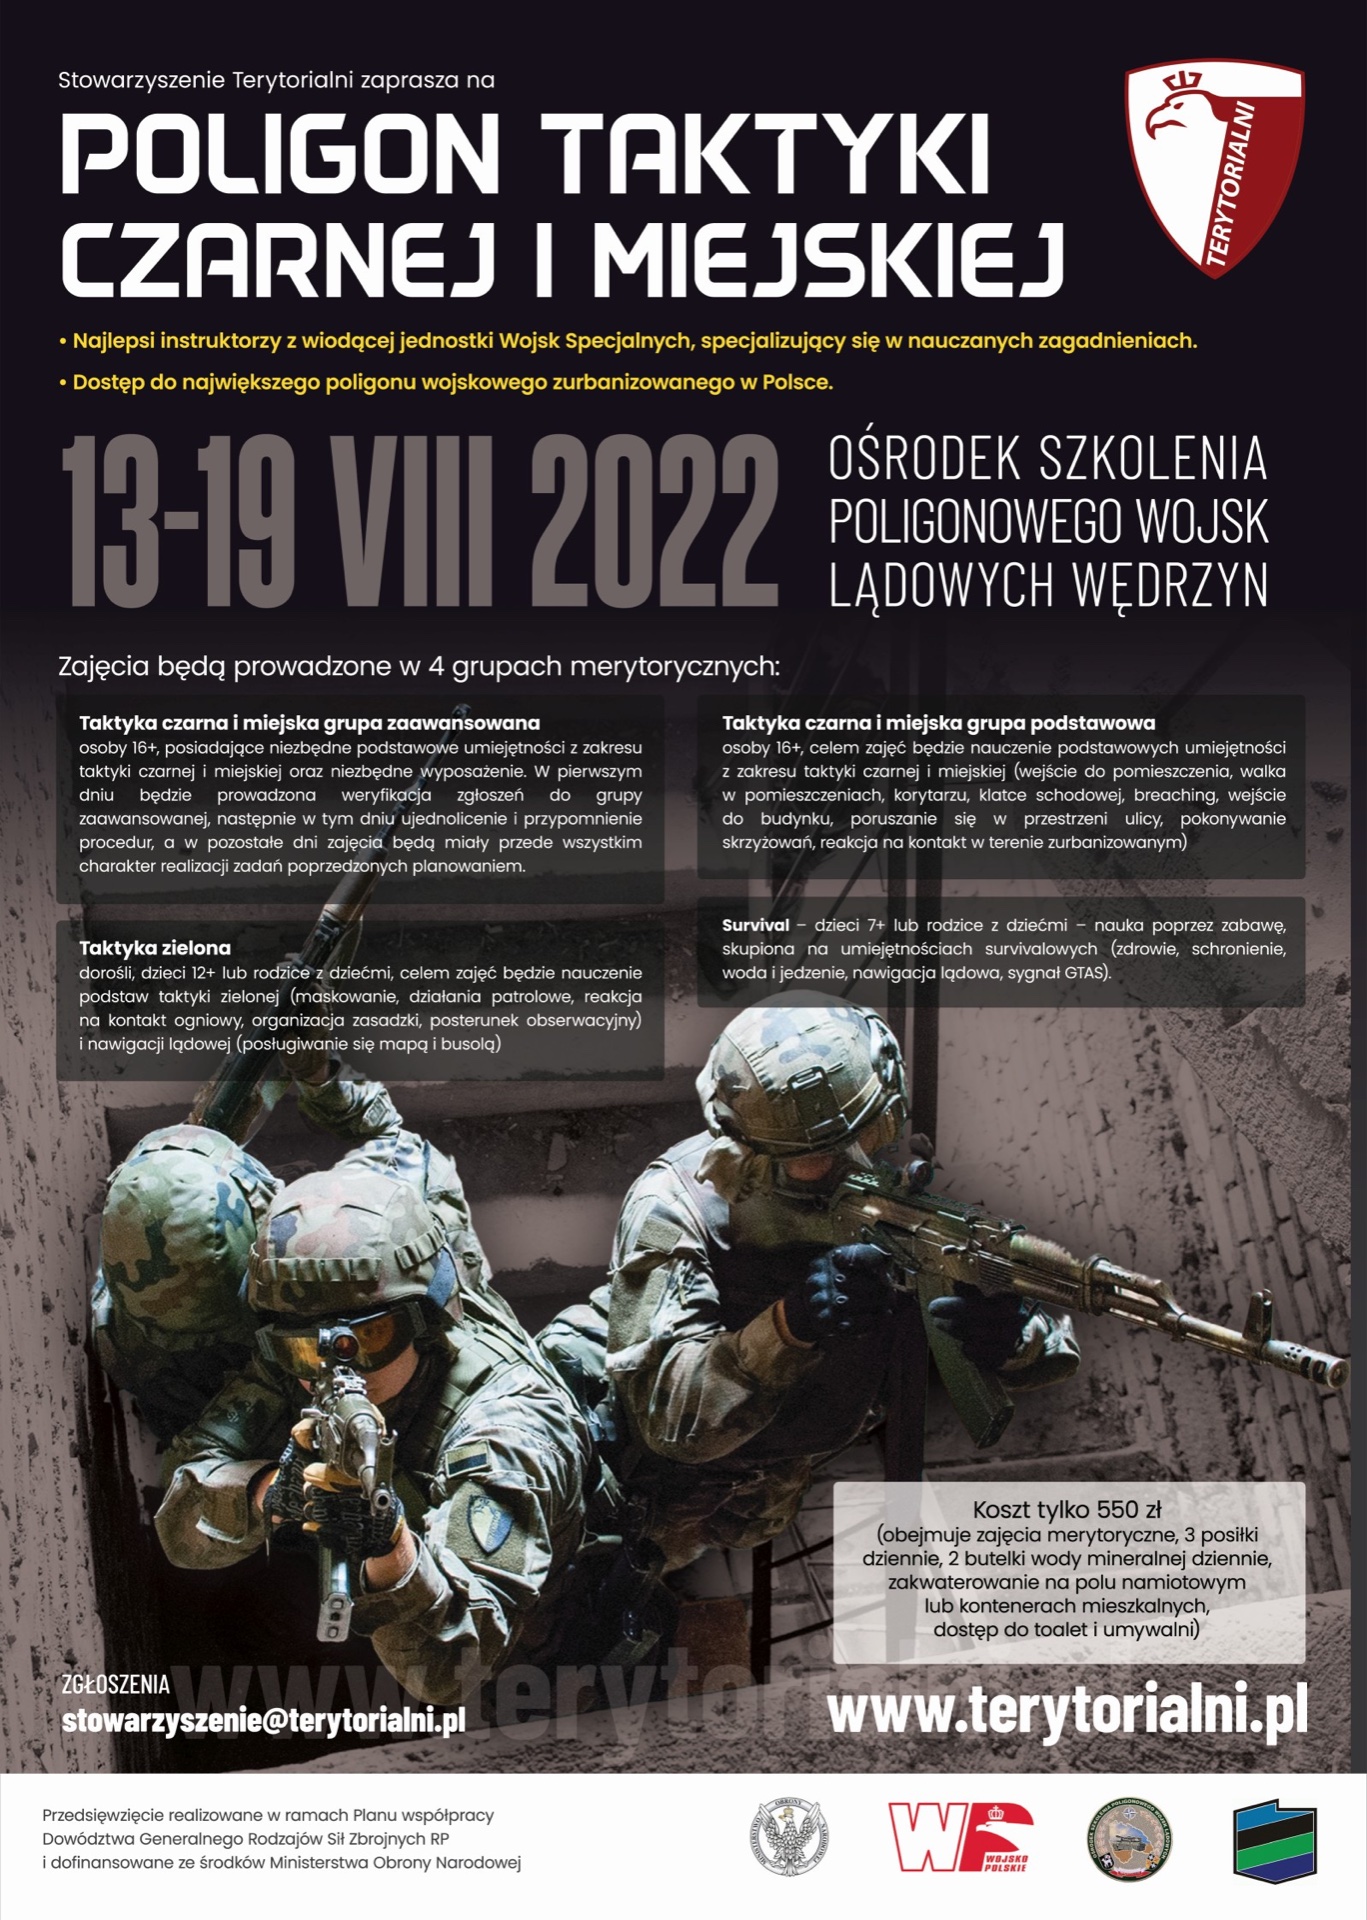 Black, city, green and survival tactics training ground - Wędrzyn August 13-19, 2022.